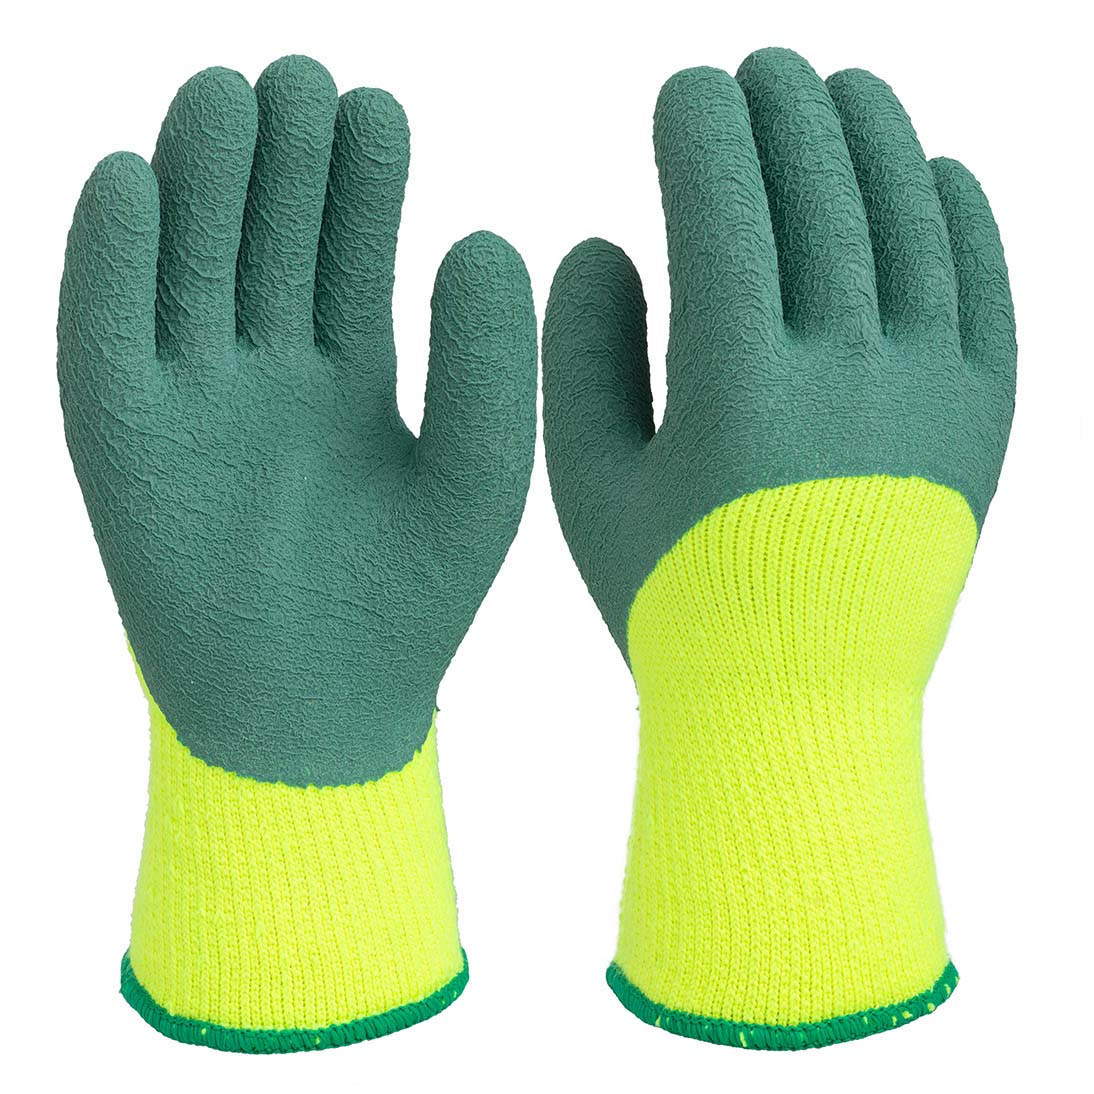 7G latex foam gloves | Half coated gloves | 7G Yellow-green latex foam gloves